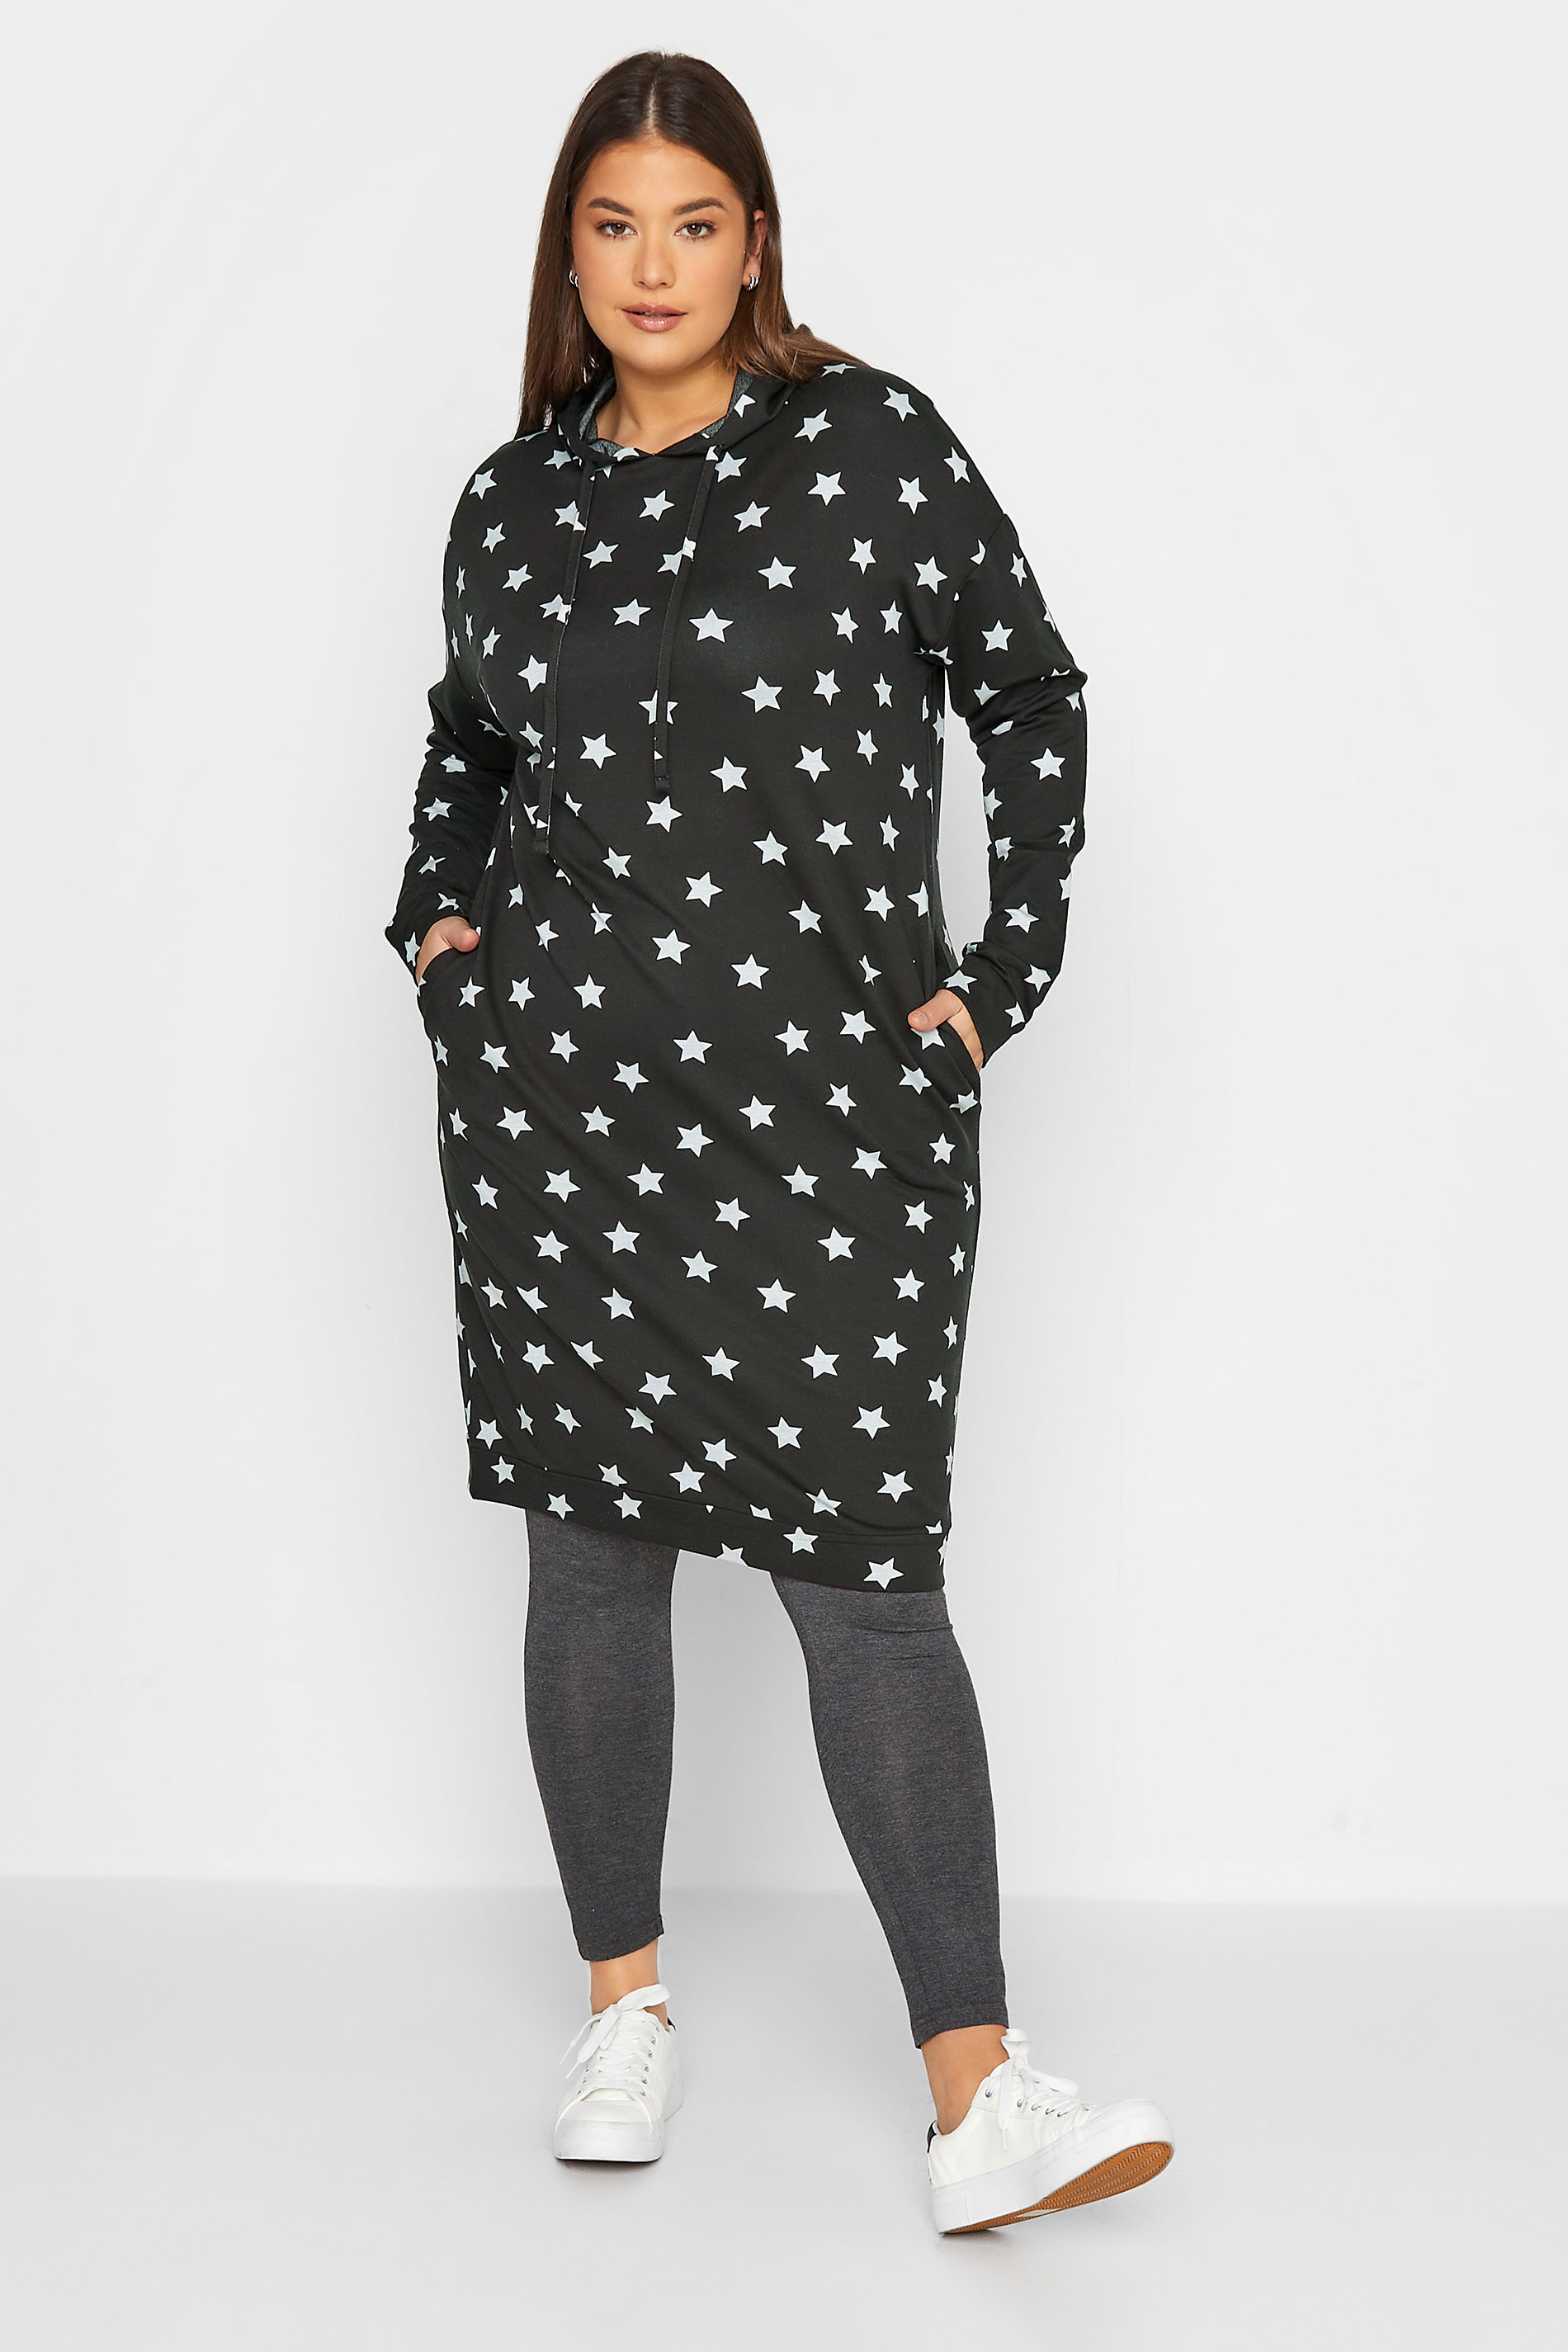 Tall Women's LTS Black Star Print Hoodie Dress | Long Tall Sally 1